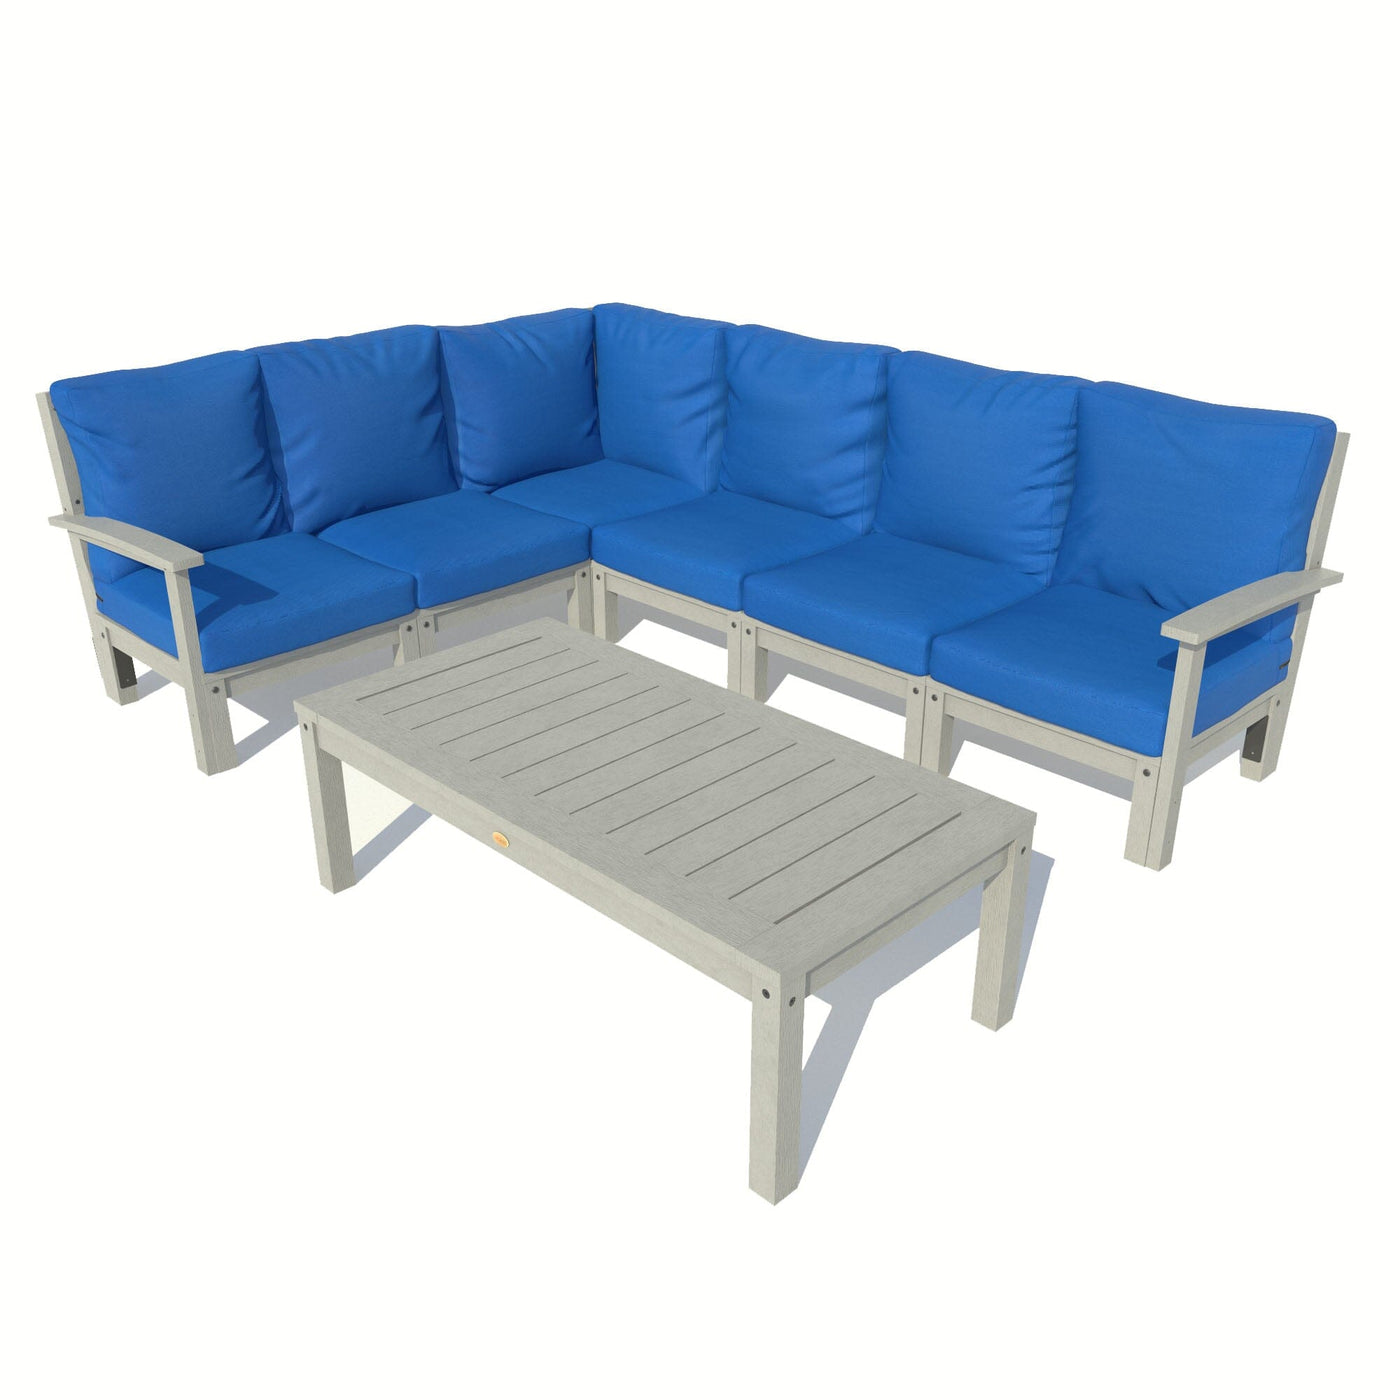 Bespoke Deep Seating: 7 Piece Sectional Sofa Set with Conversation Table Deep Seating Highwood USA Cobalt Blue Coastal Teak 